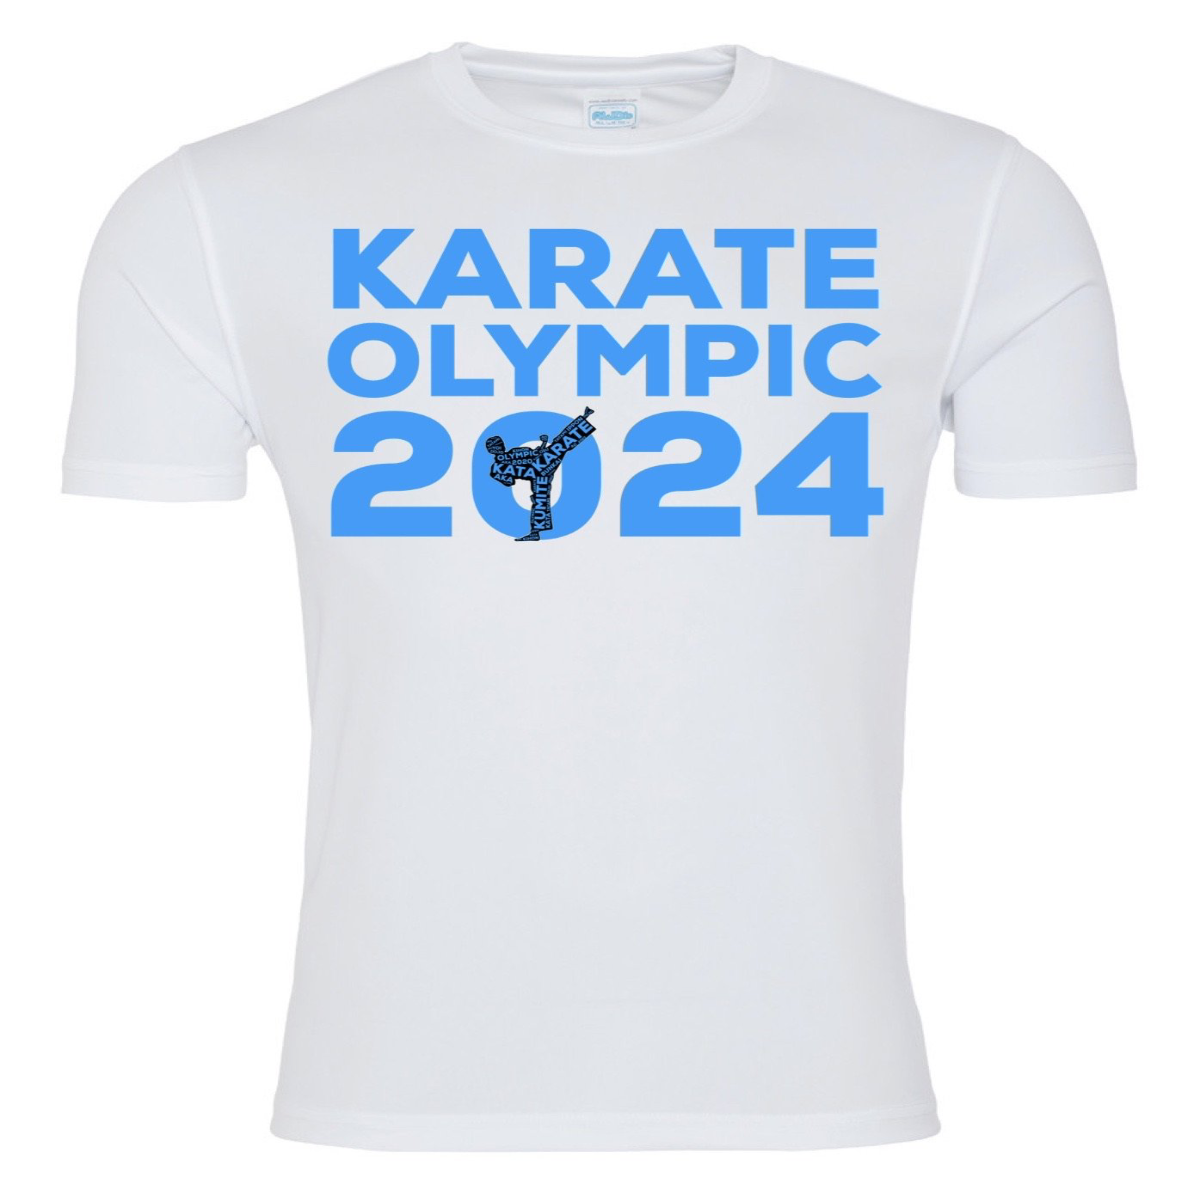 Karate Olympic 2024 T Shirt - Blue